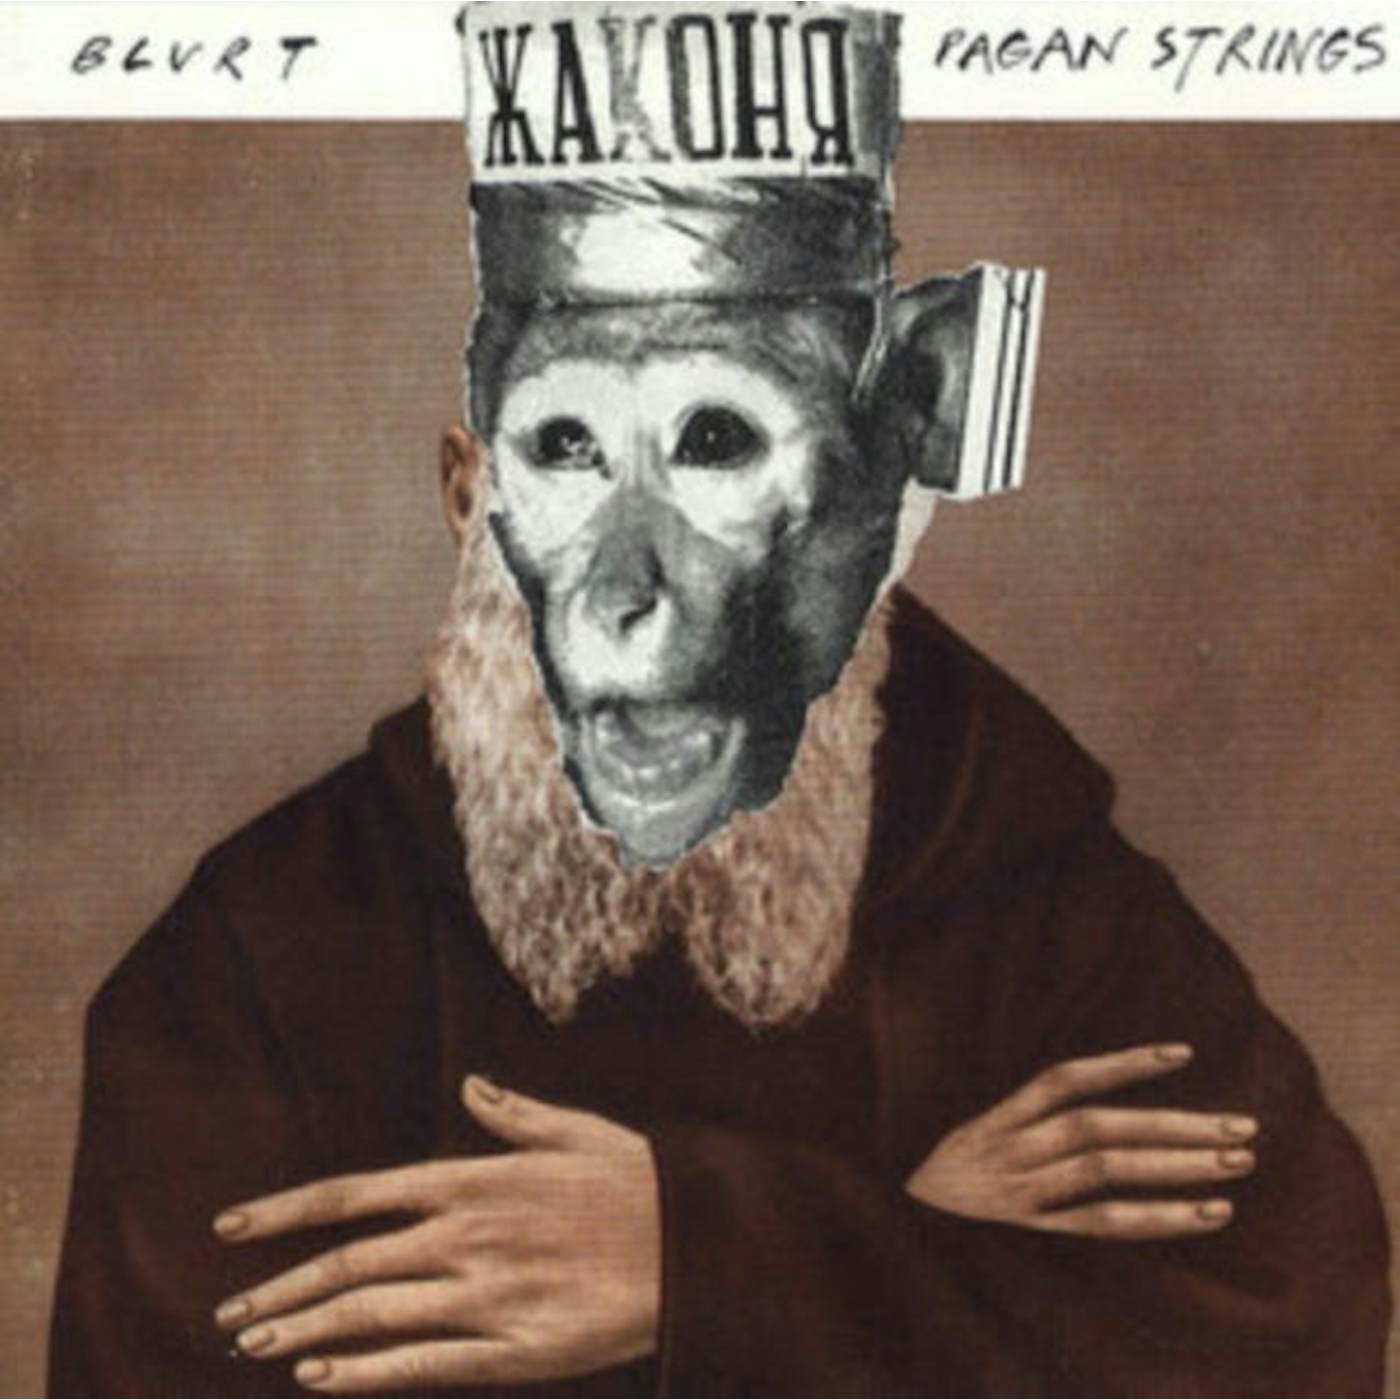 Blurt LP - Pagan Strings (Vinyl)